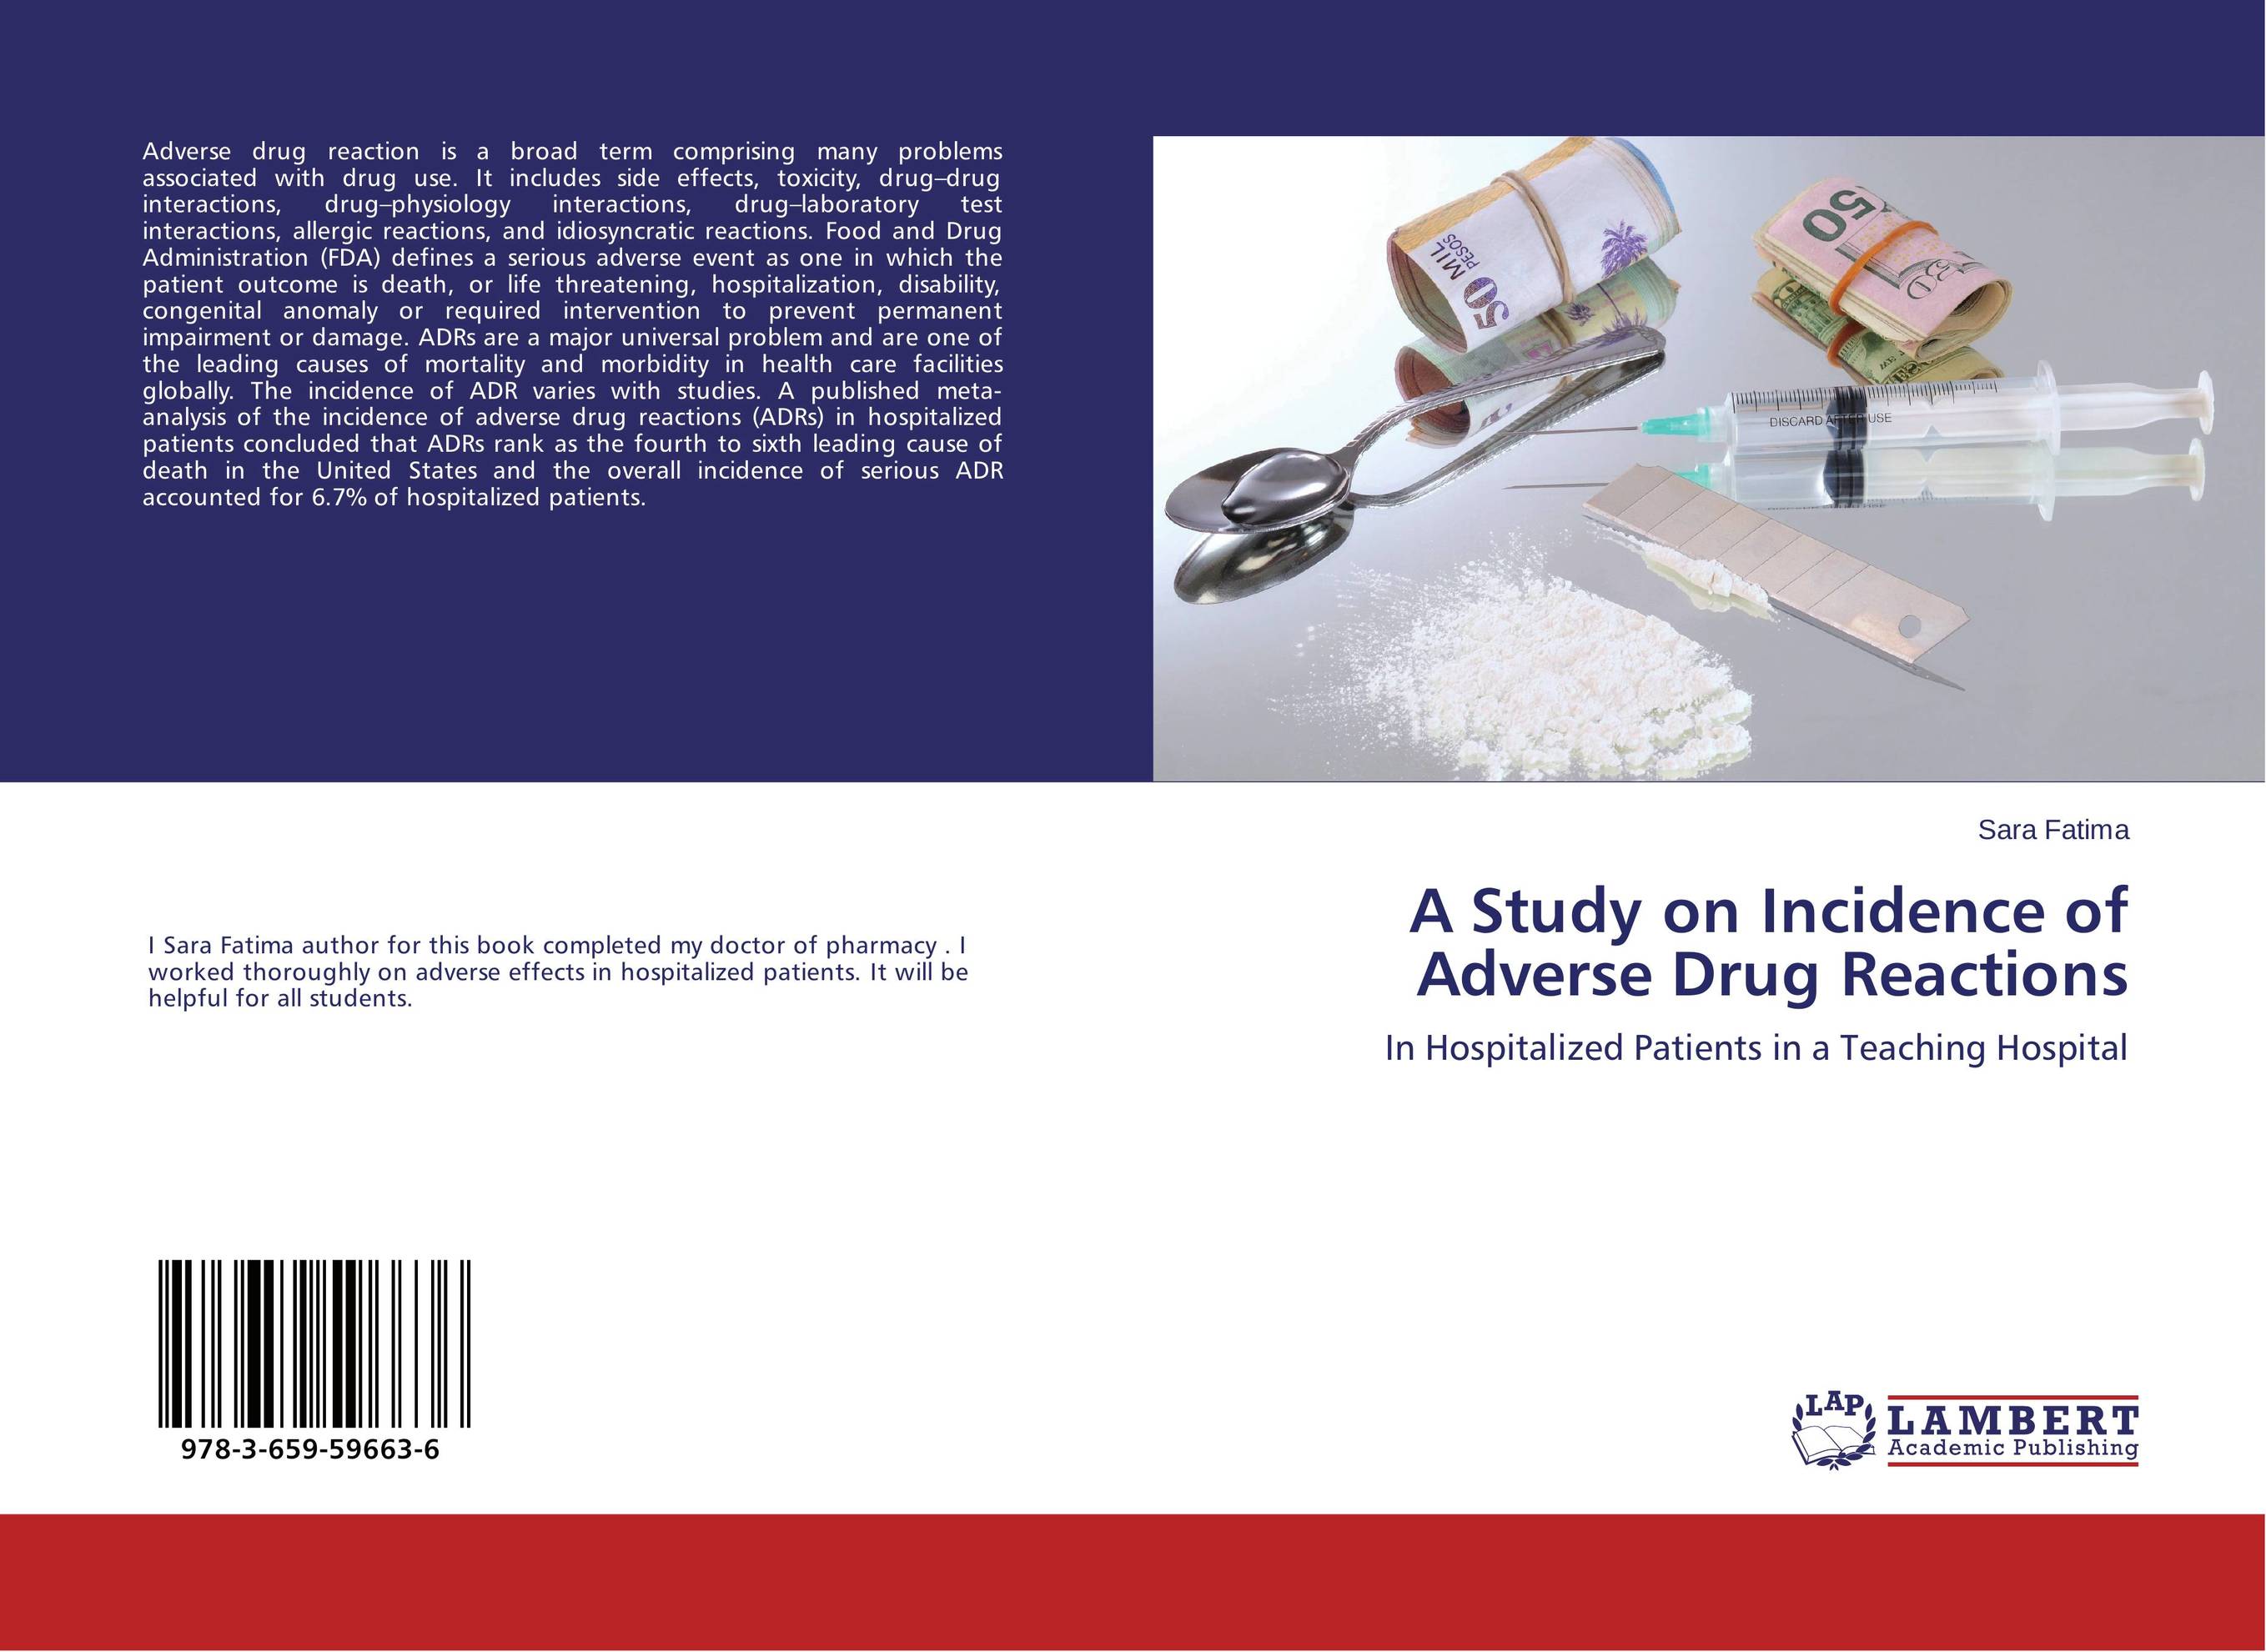 Tramadol Addiction. Adverse drug Reactions (ADRS). Broad term